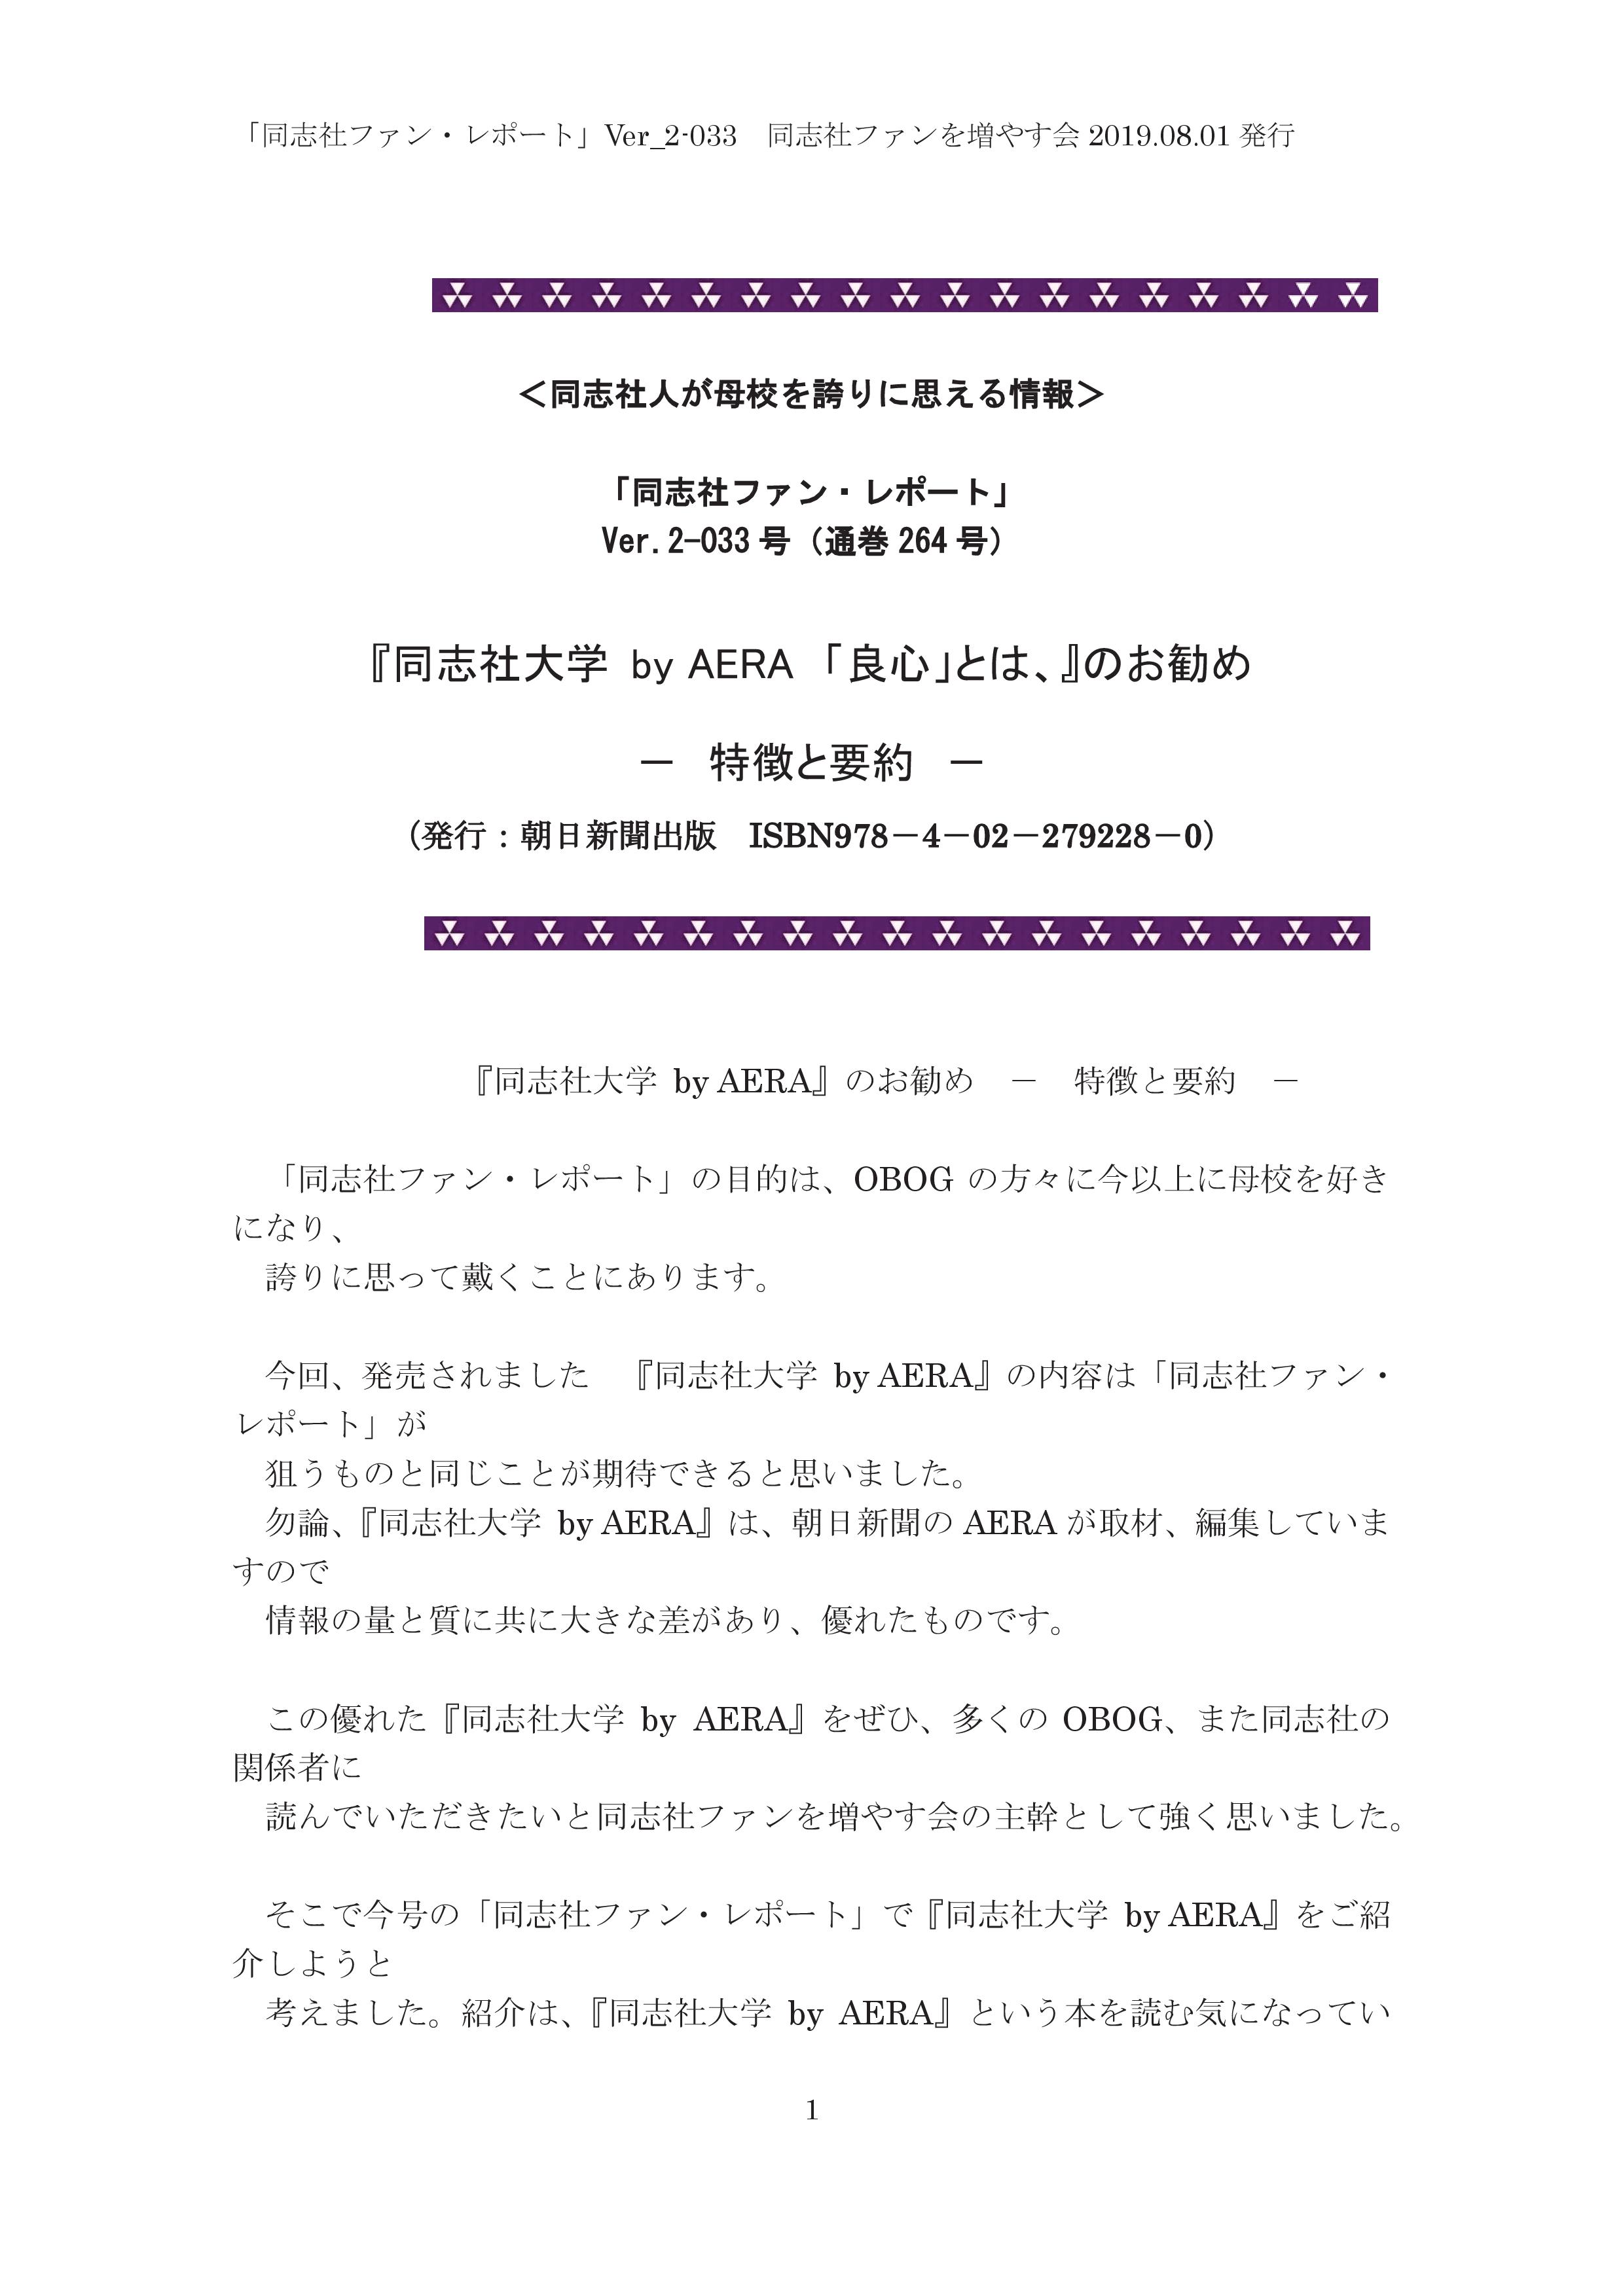 Ver_2-033（通巻264号）「同志社大学 by AERA」のお勧め-001.jpg